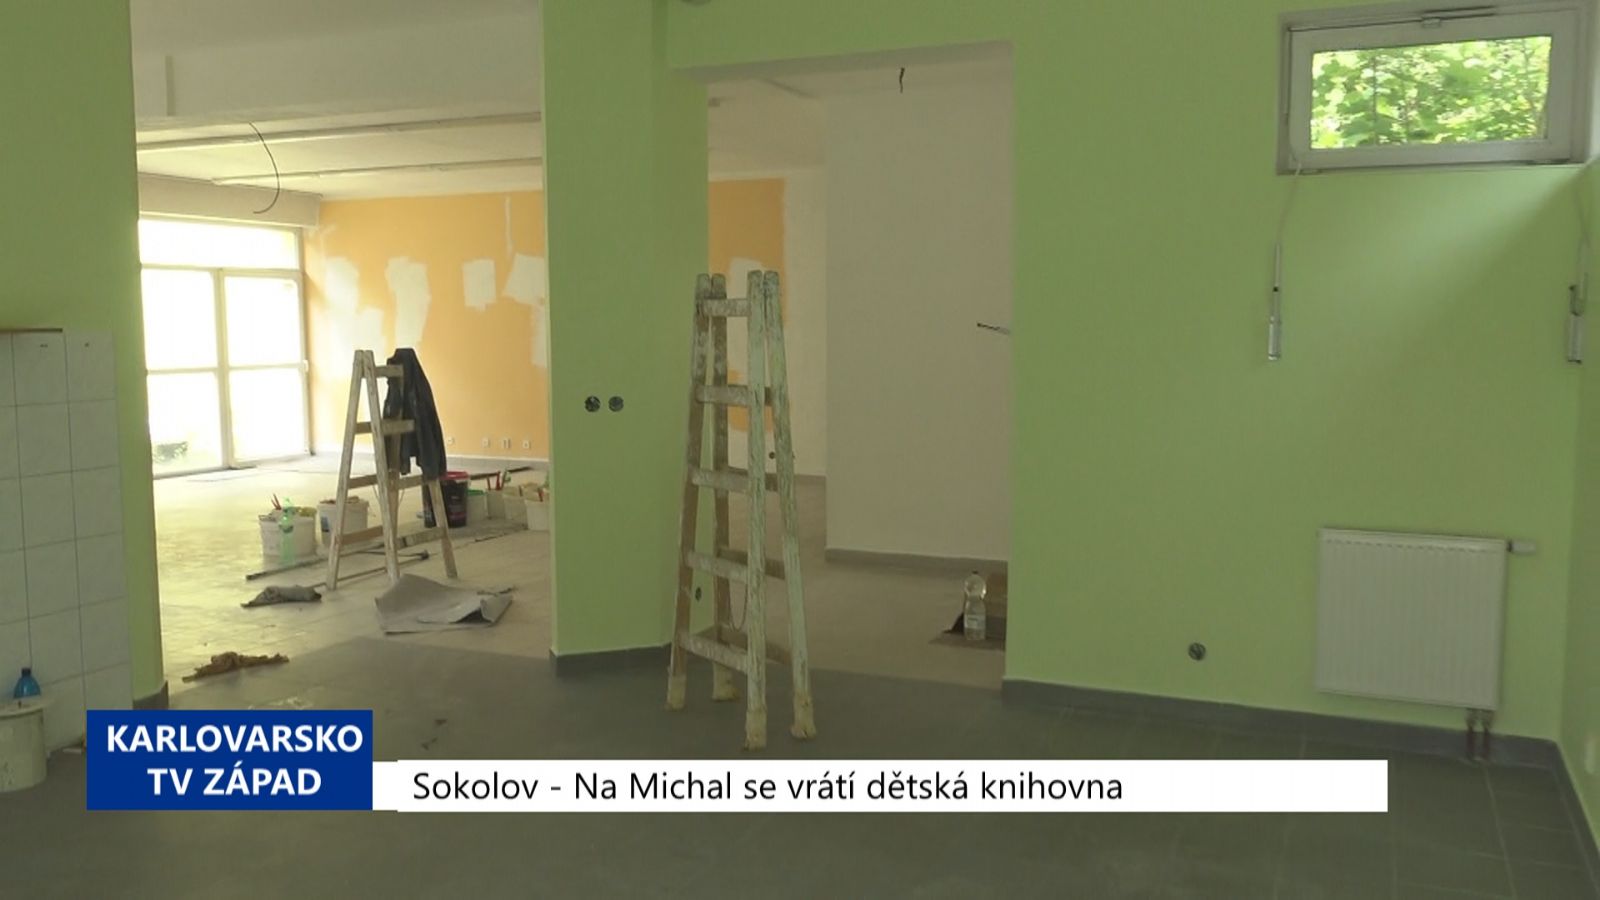 Sokolov: Na Michal se vrátí dětská knihovna (TV Západ)